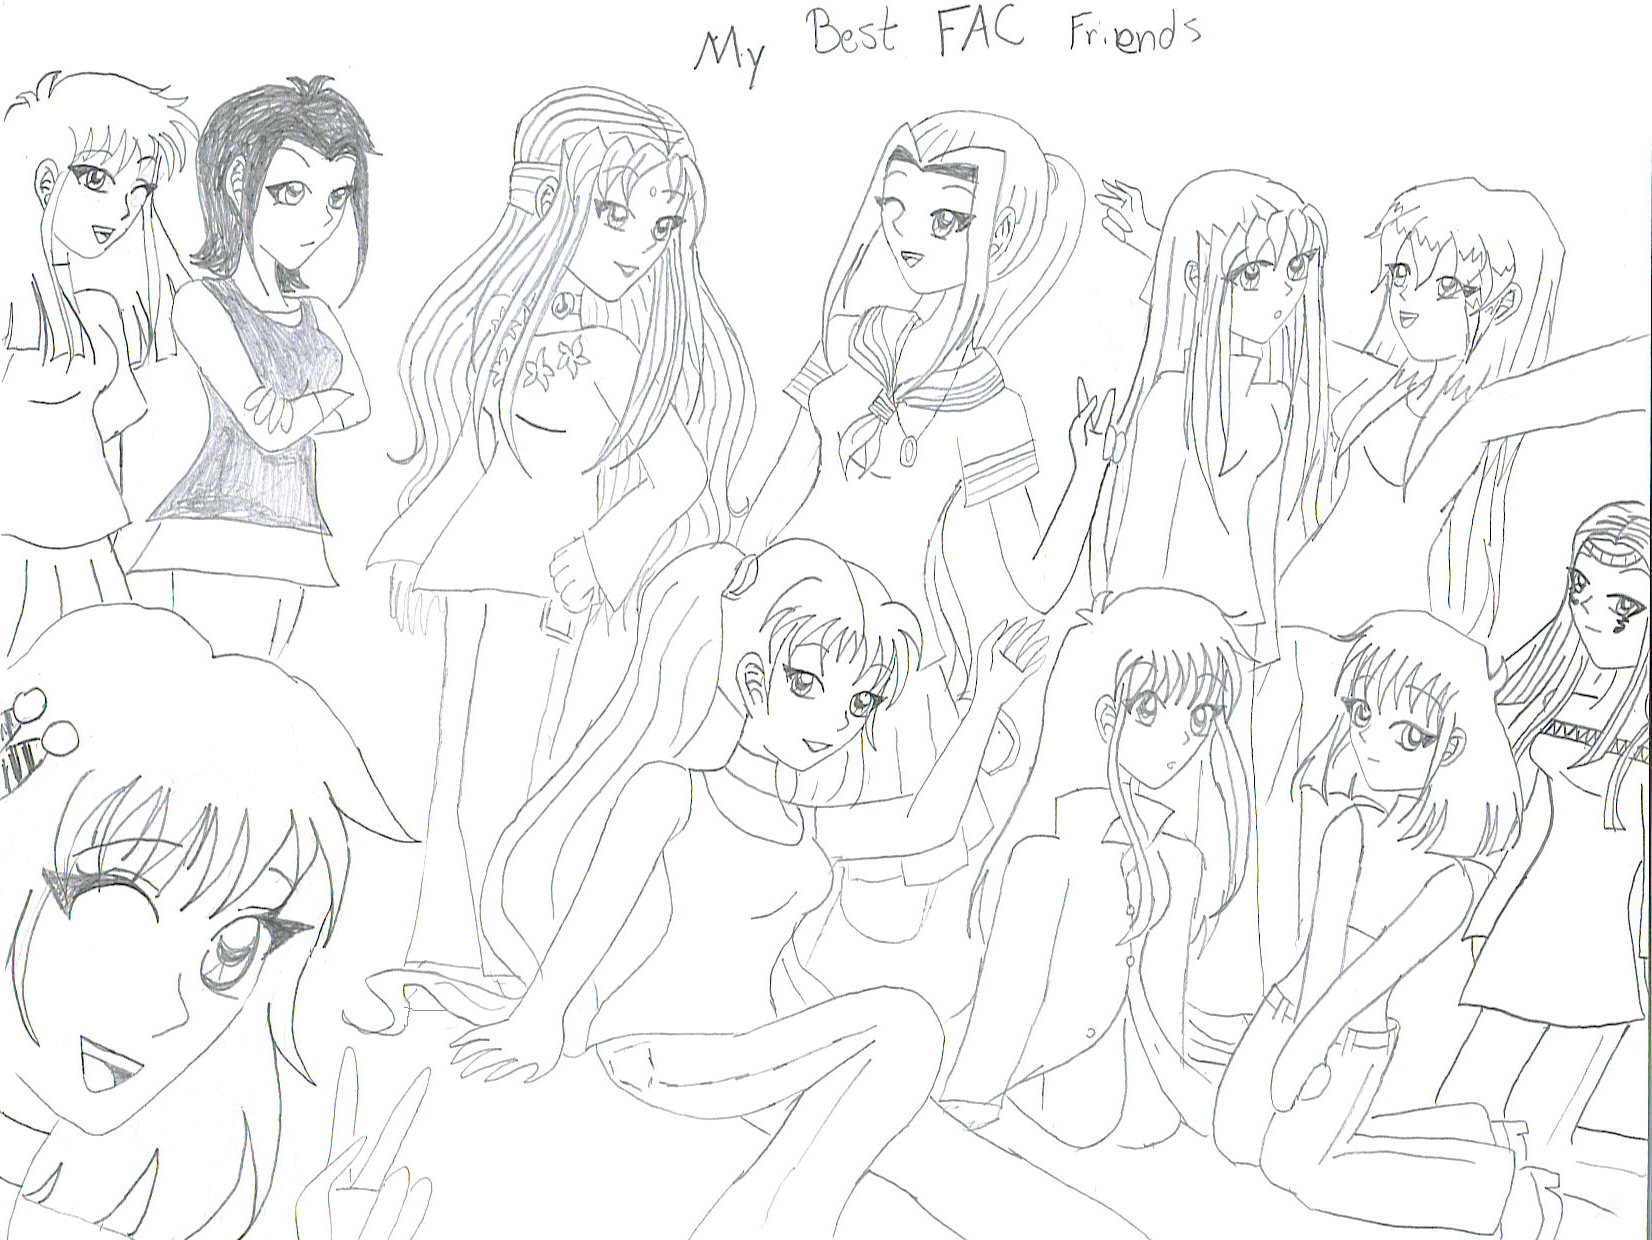 My Best FAC Friends by KionaKina